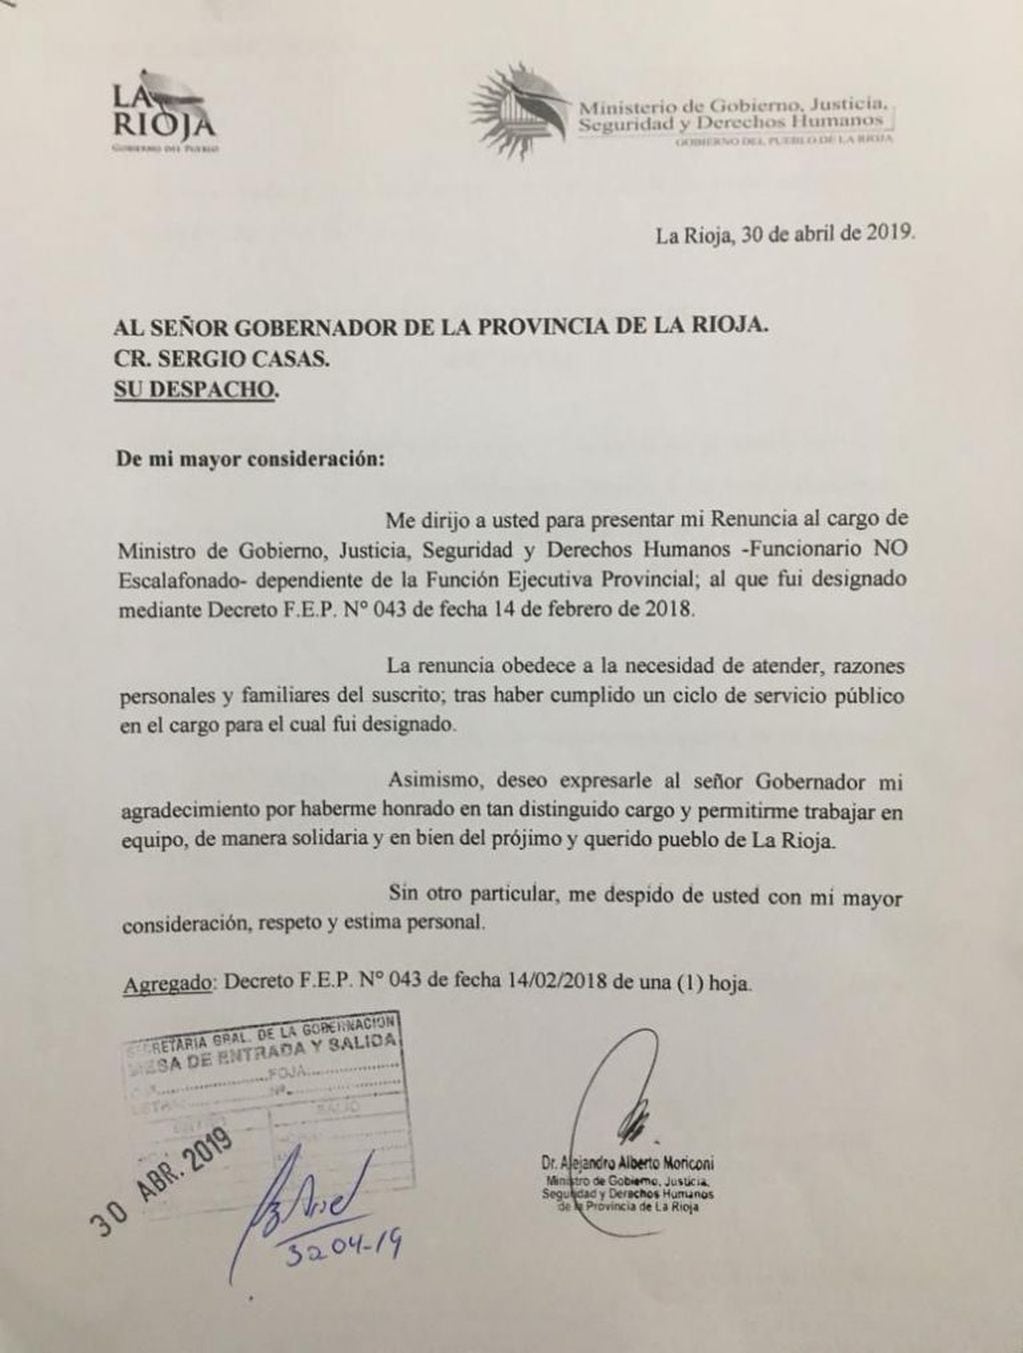 Texto de dimisión el cargo que presentó Moriconi